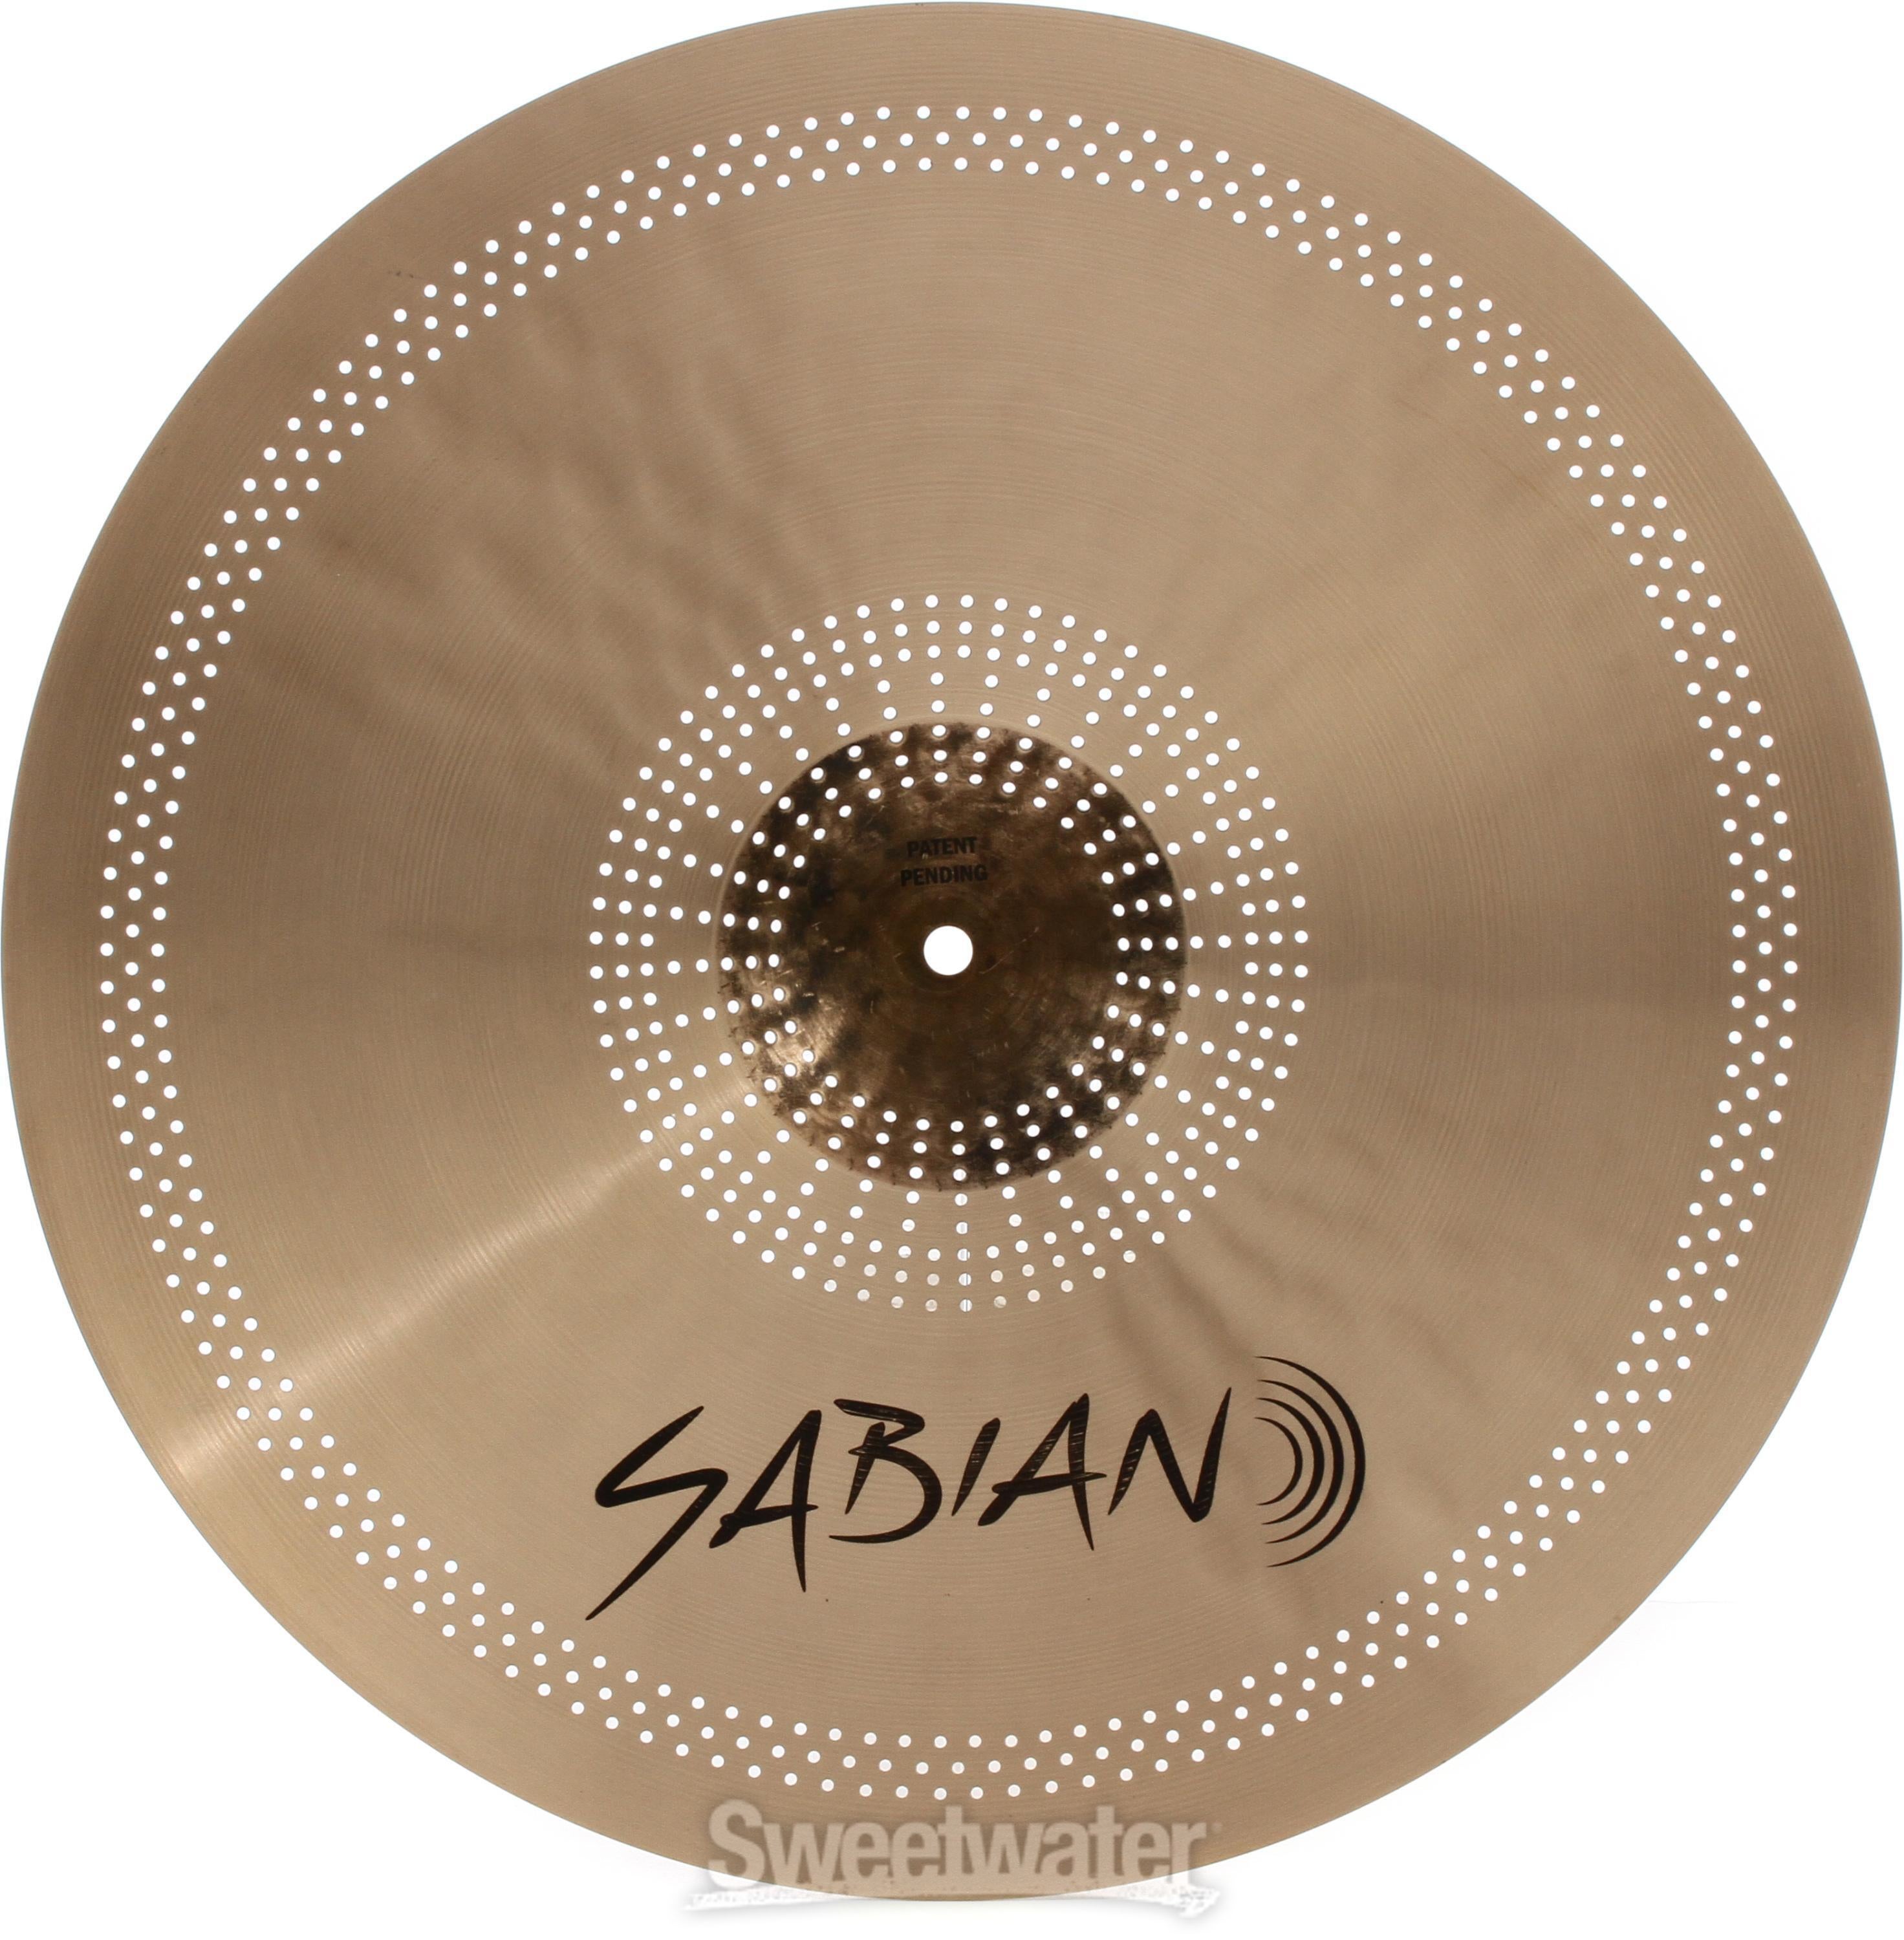 Sabian 20 inch FRX Ride Cymbal